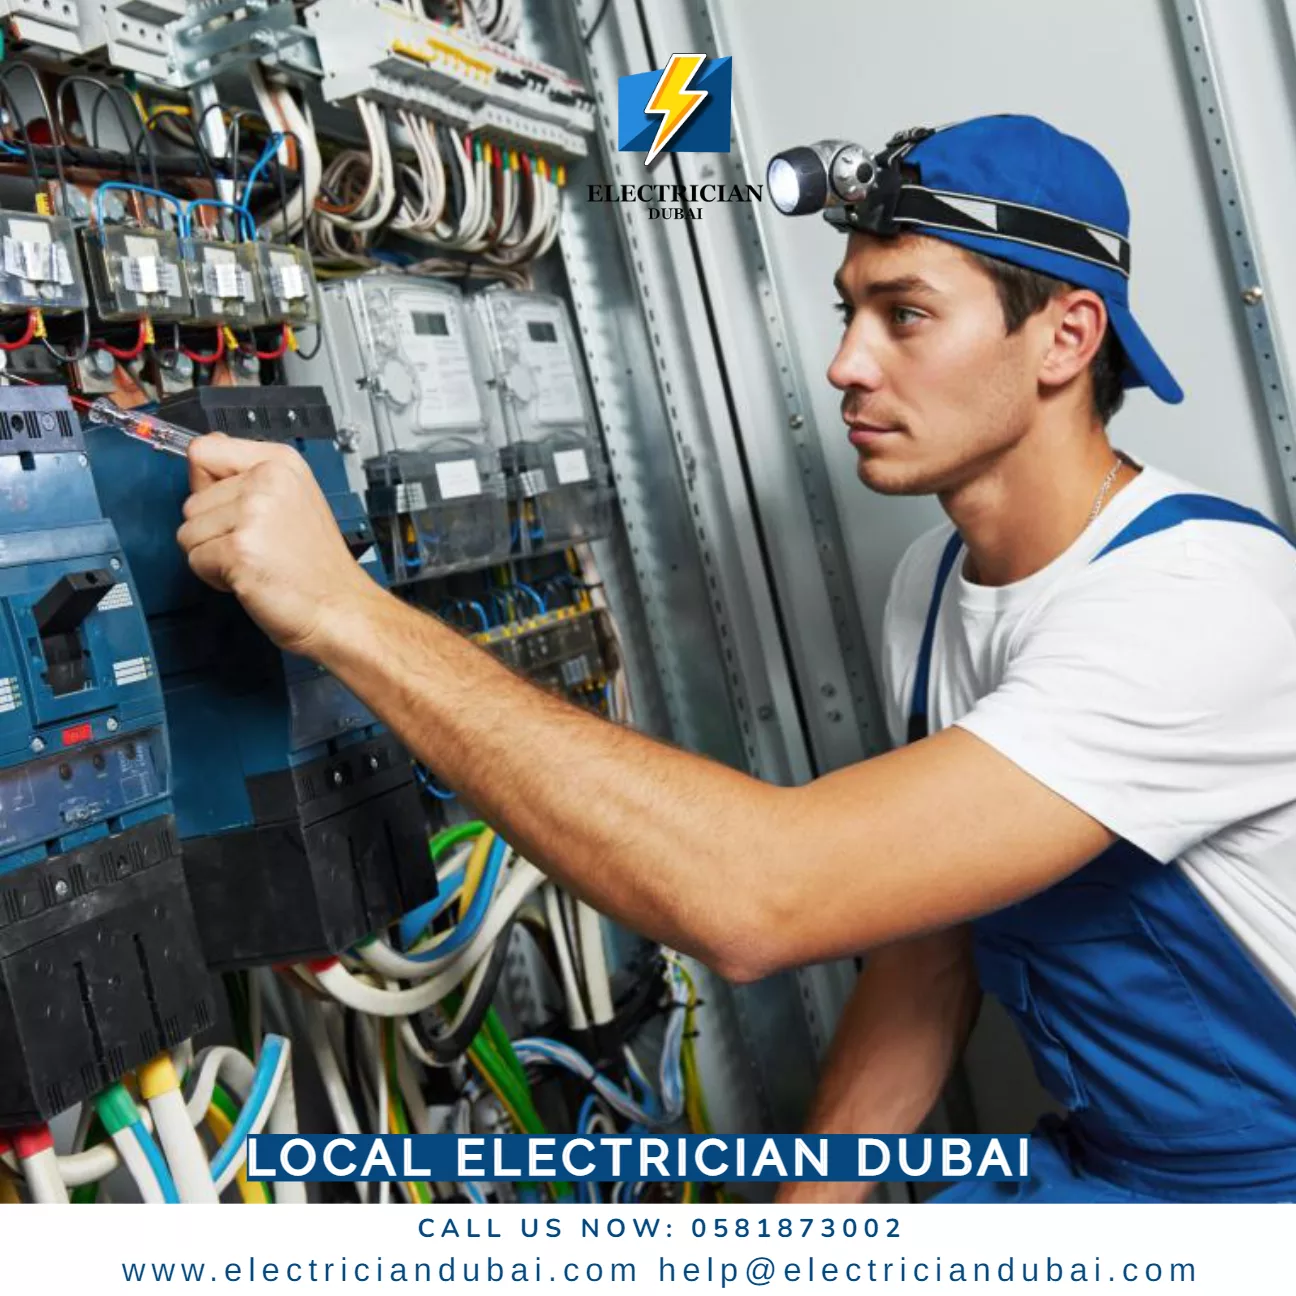 Local Electrician Dubai